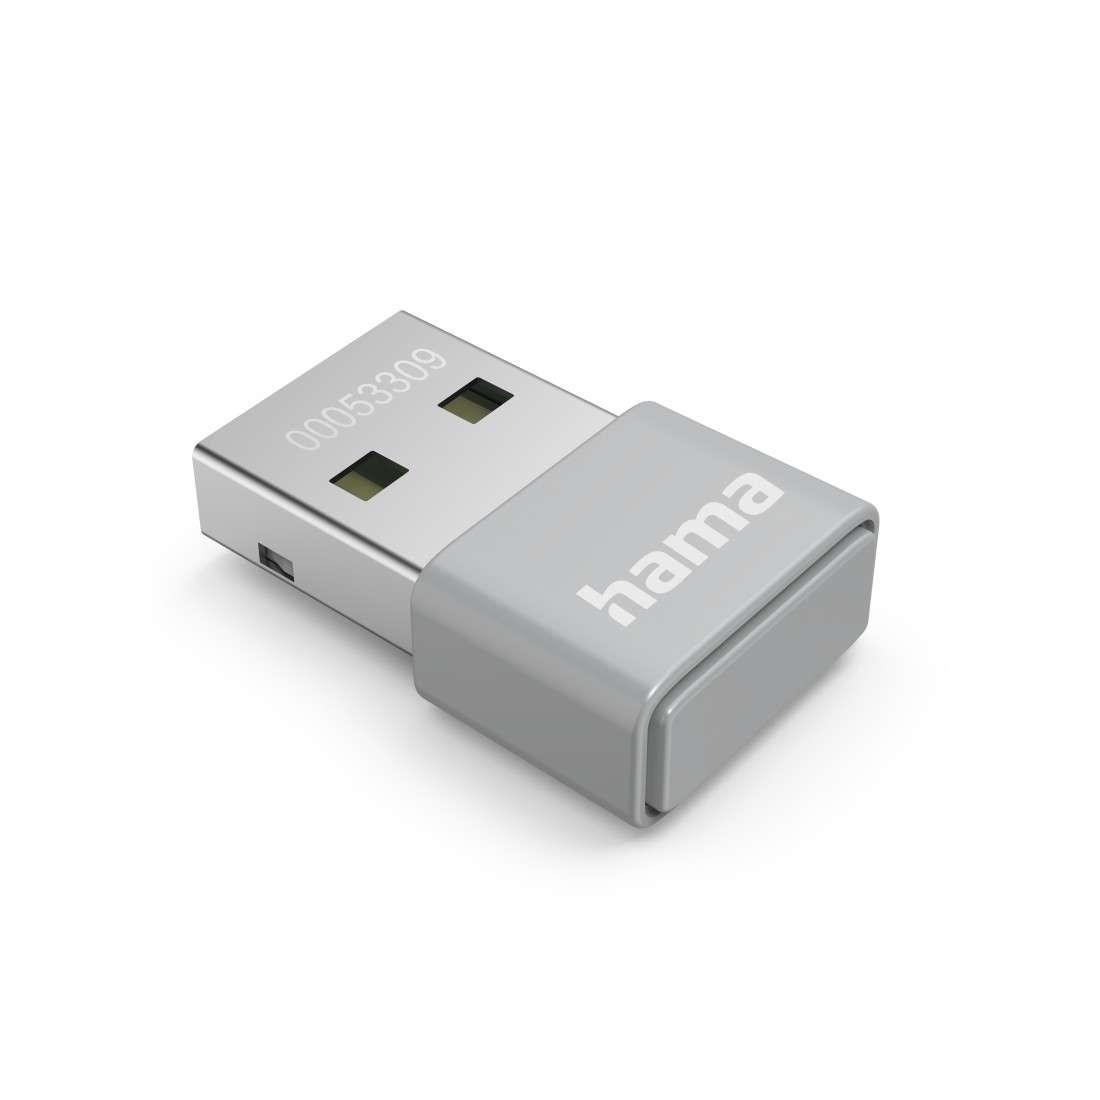 HAMA N150 Nano-WLAN-USB-Stick, 2,4 GHz